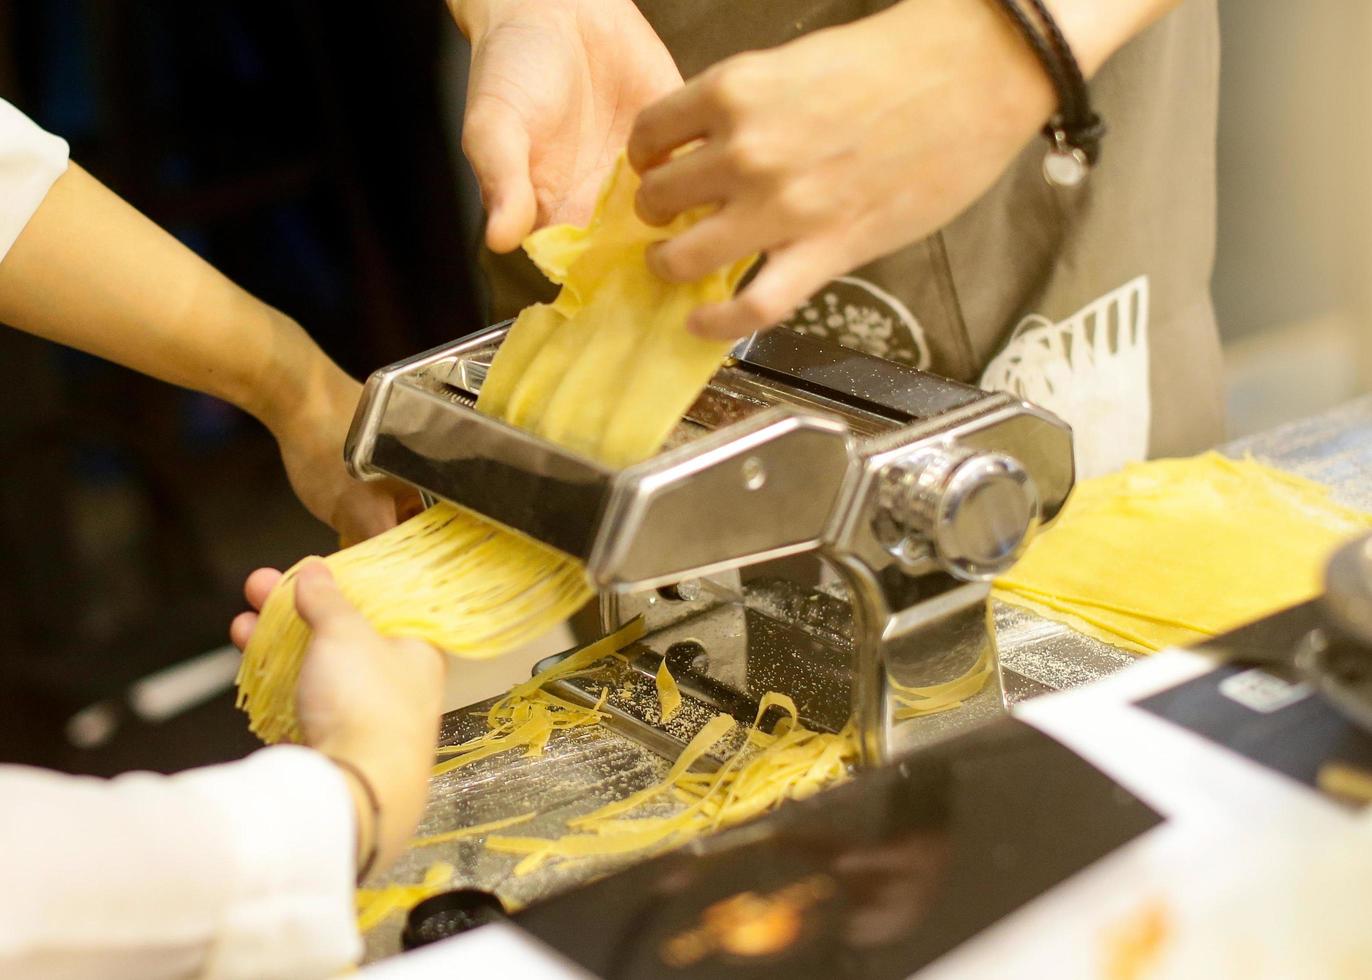 Chef making pasta with a machine, home made  fresh pasta photo